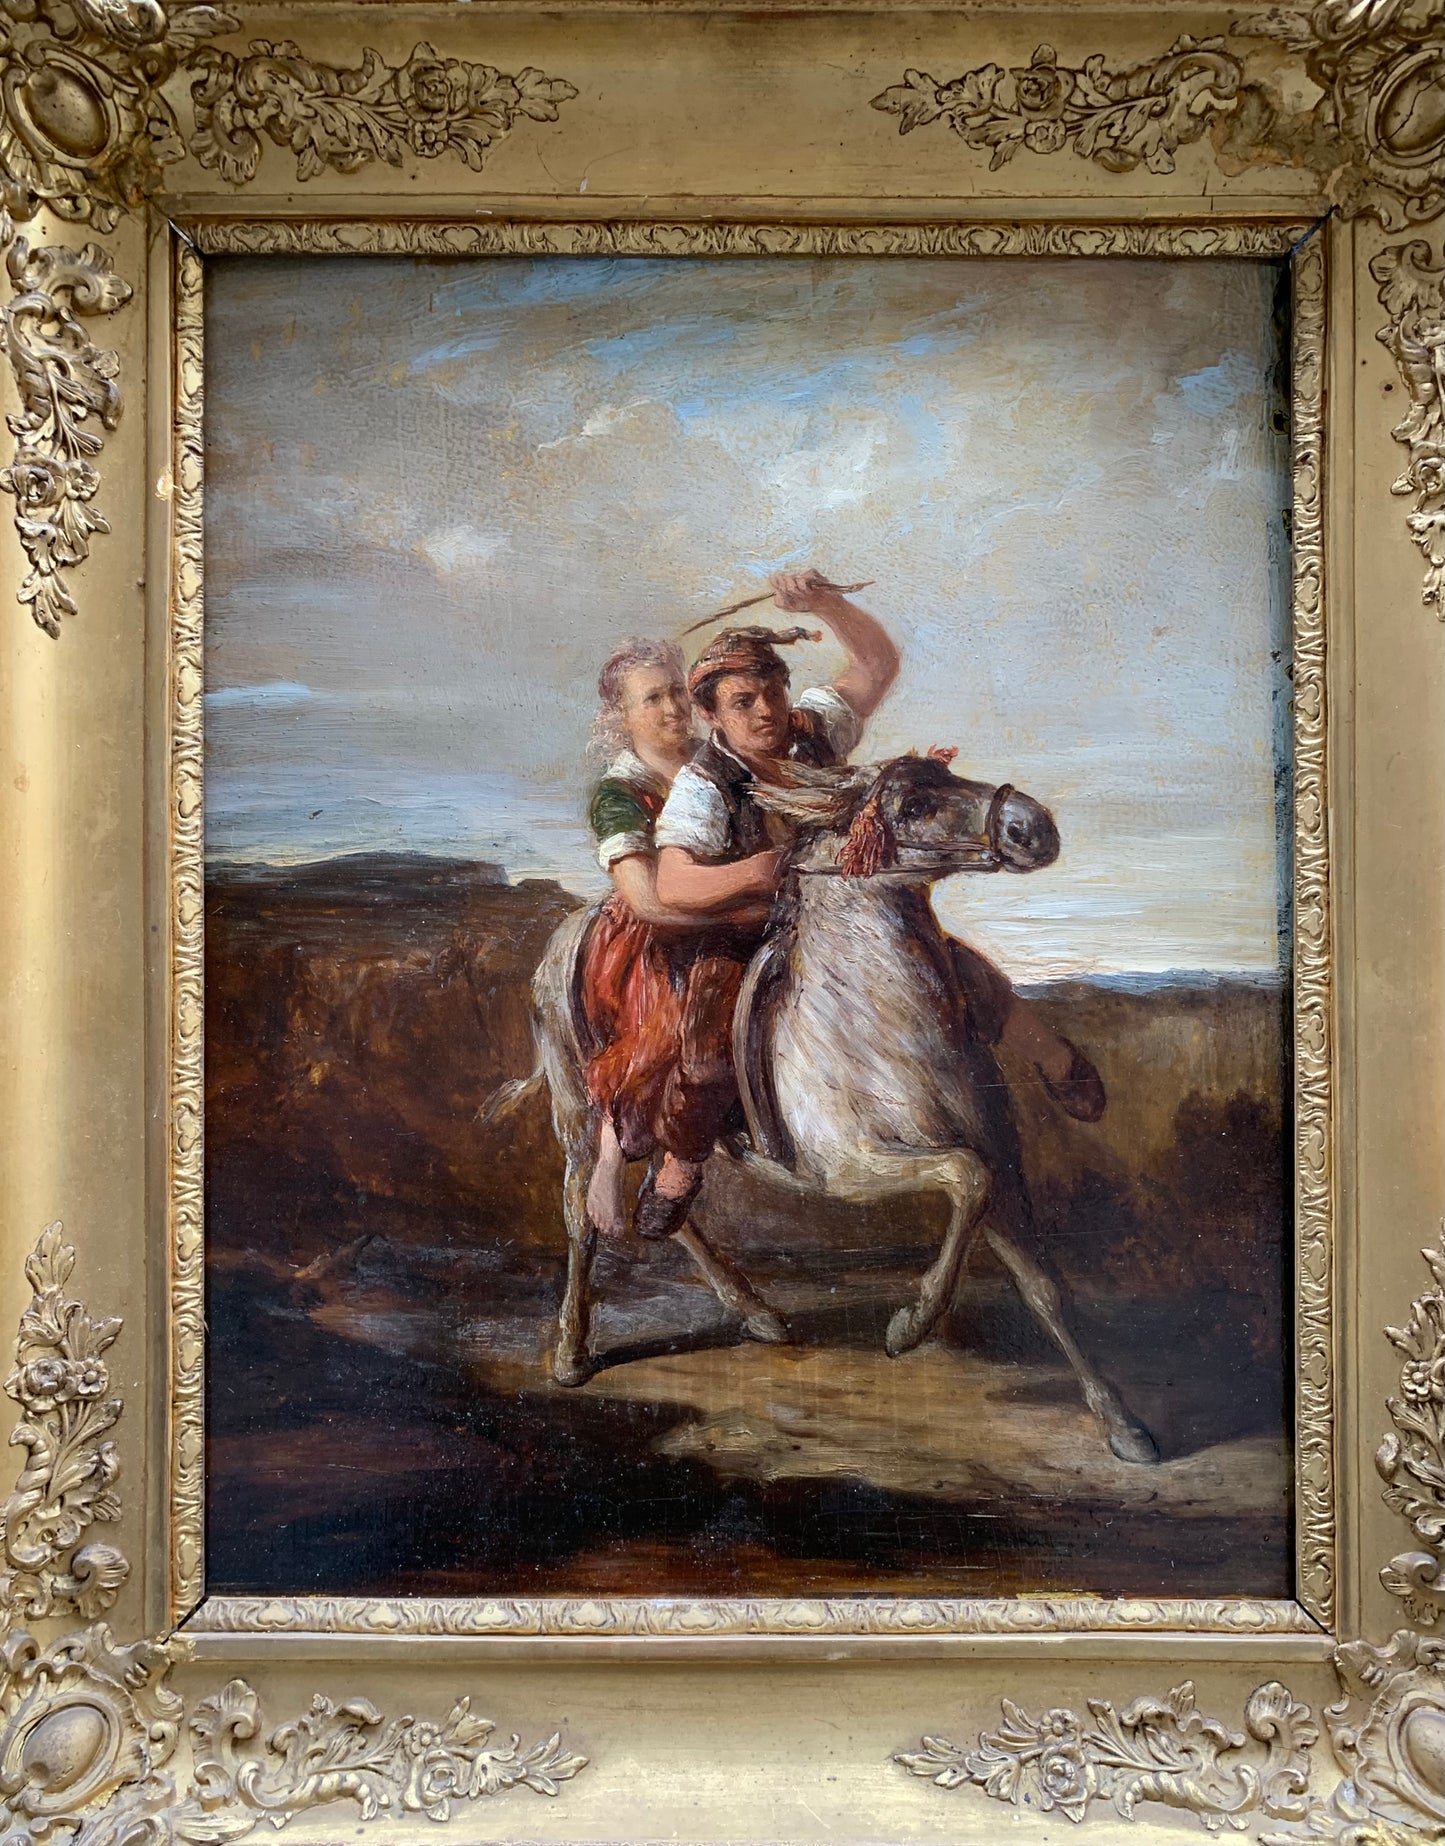 The Runaways, or Swiss boy on Donkey. Attributed to Joseph Hornung. Mid XIX century.